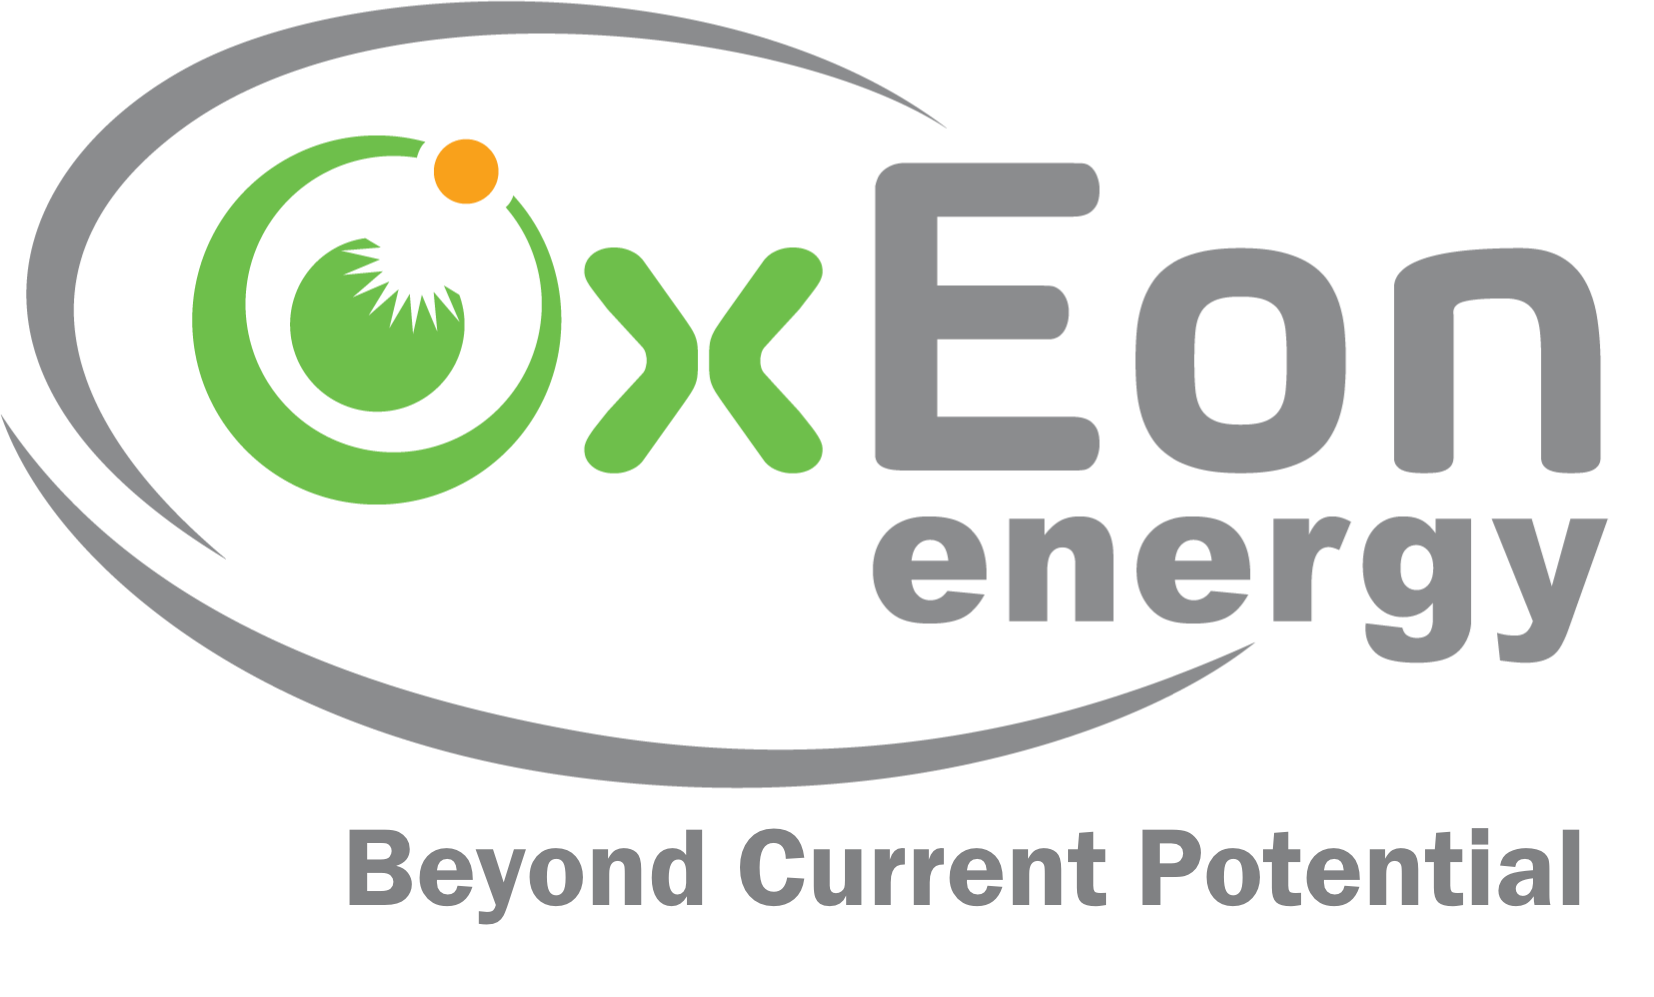 OxEon Energy logo